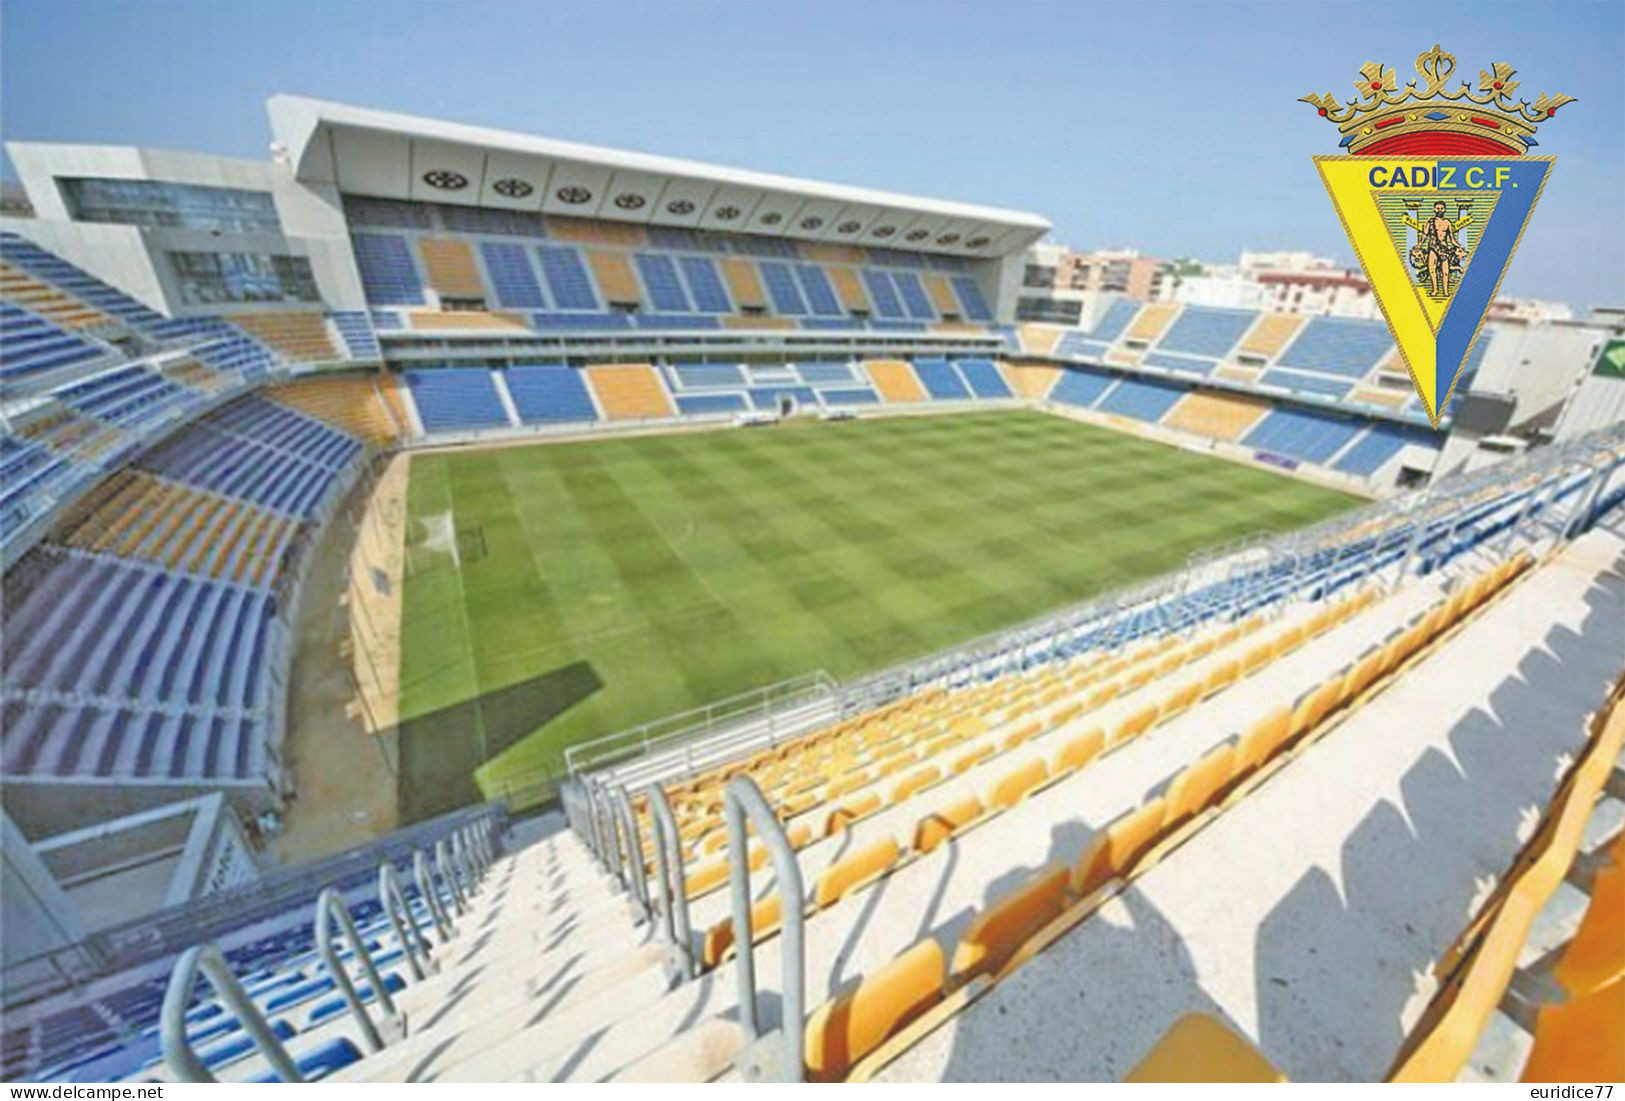 Stadium Nuevo Mirandilla (Cadiz CF) Postcard - Size: 15x10 Cm. Aprox. - Football